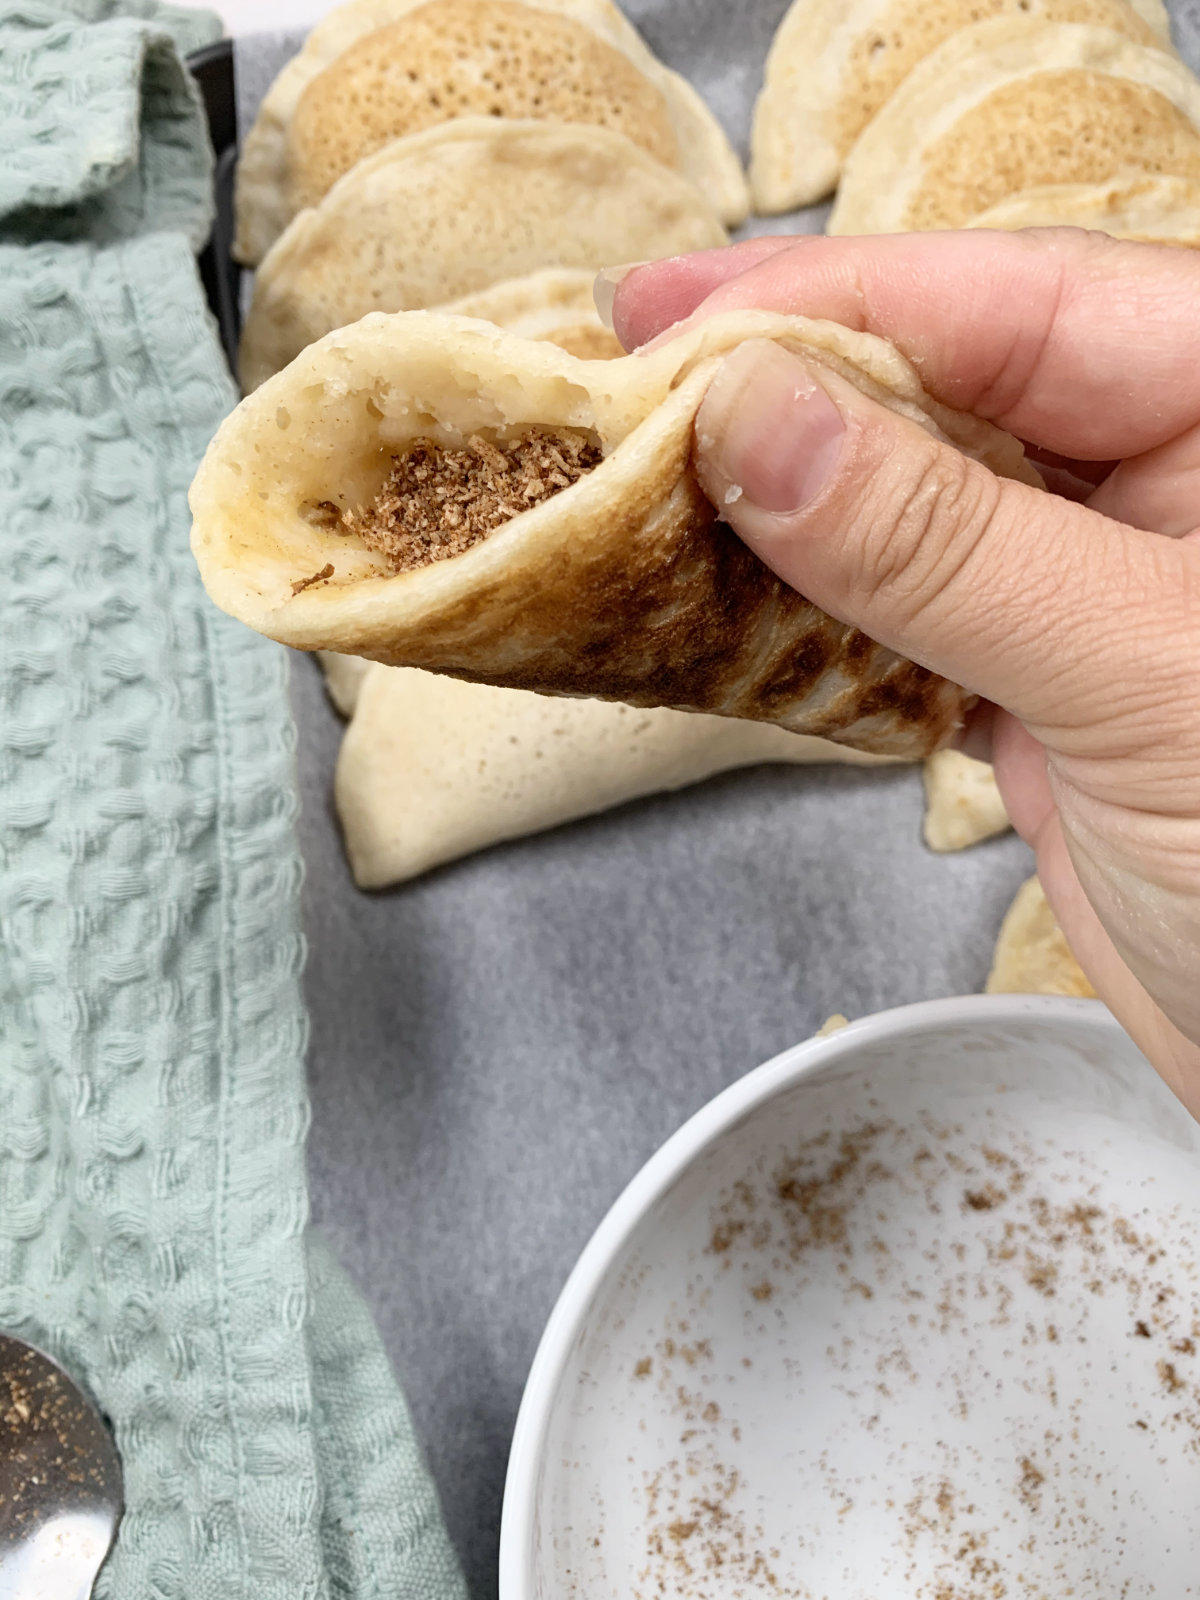 sealing the pancake with walnut filling